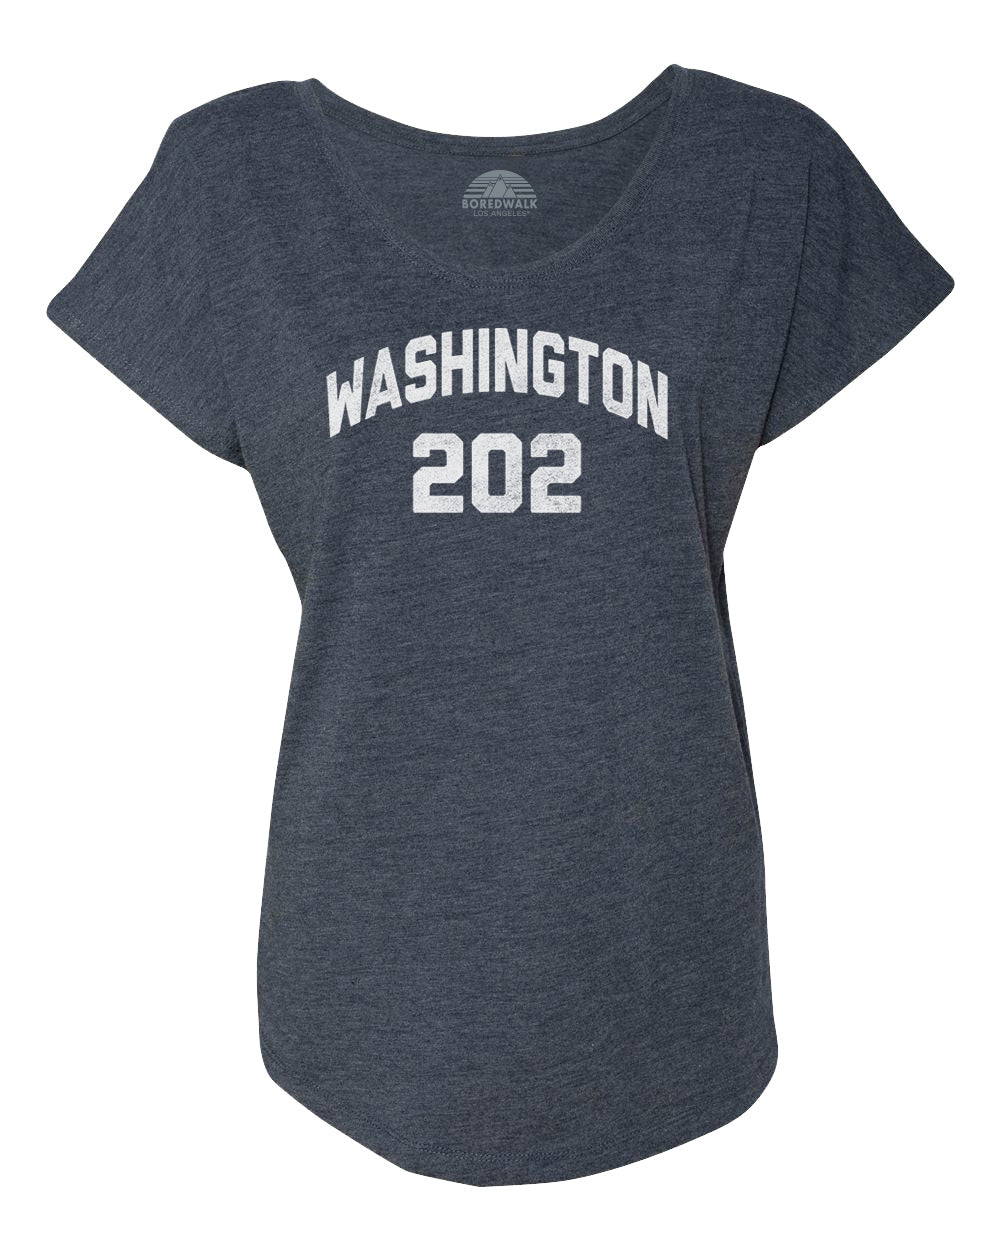 Women's Washington DC 202 Area Code Scoop Neck T-Shirt